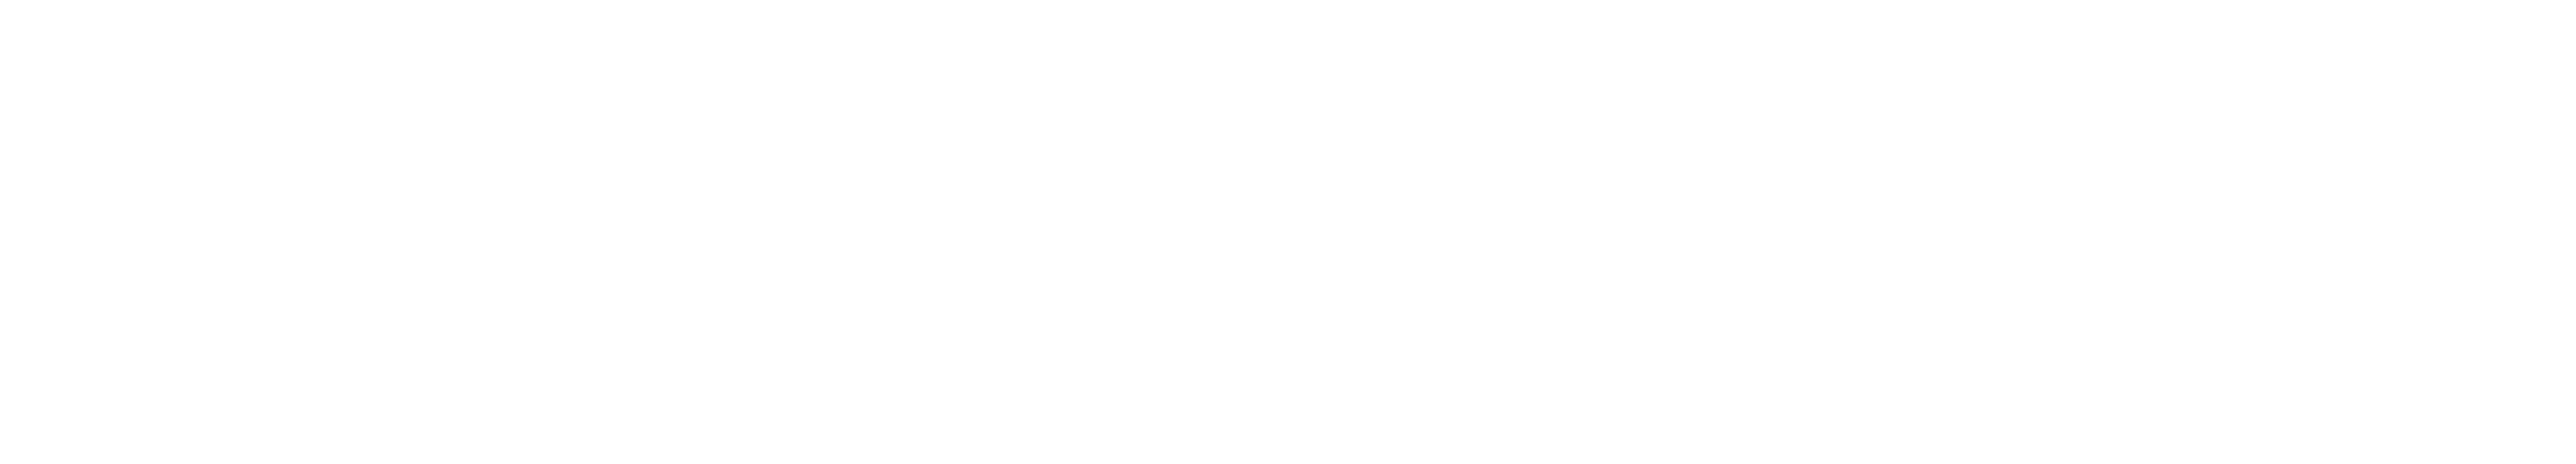 PARTOUT logo - Horizontal blanc